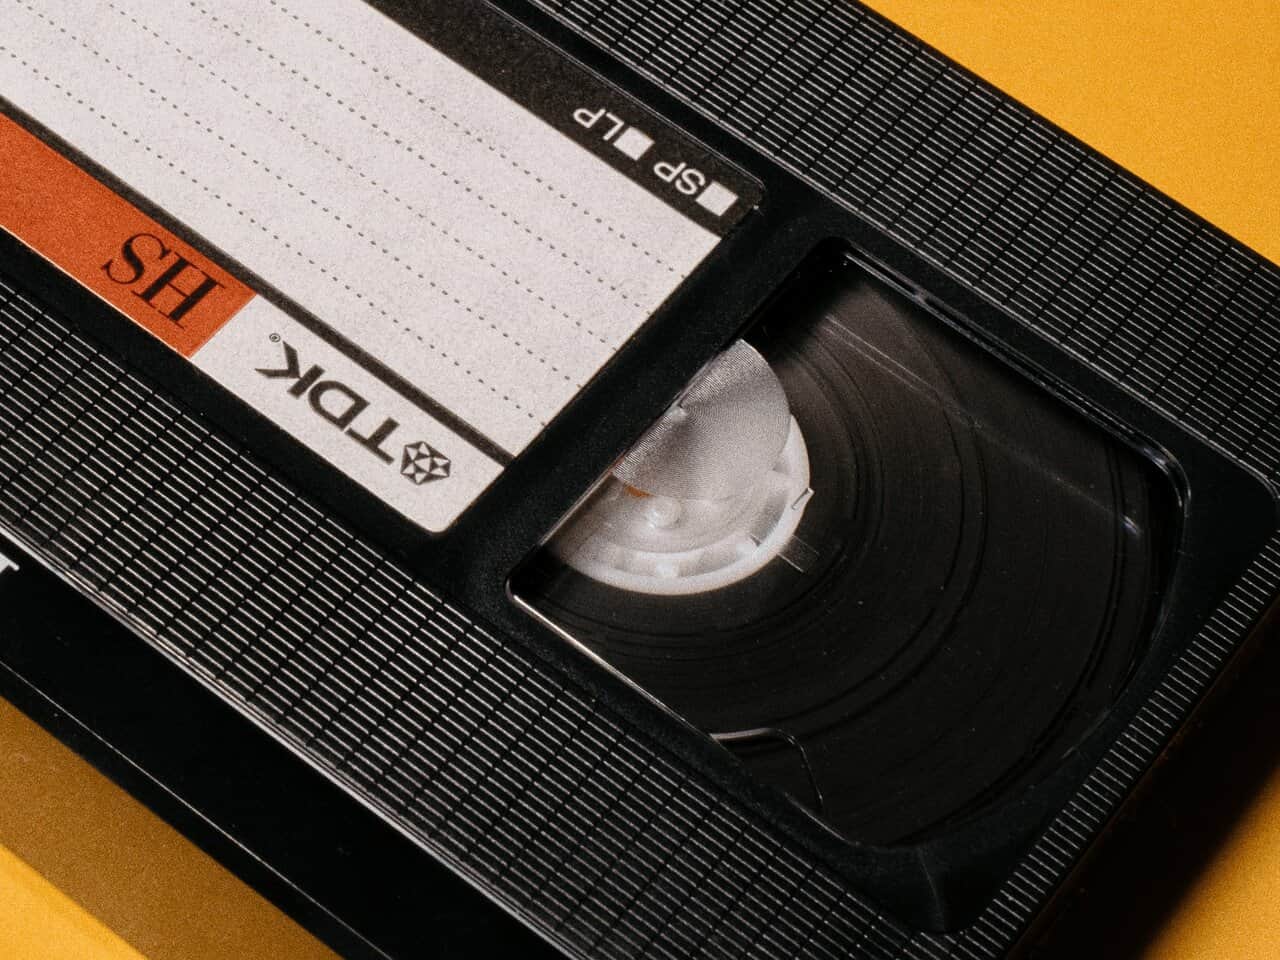 VHS tape